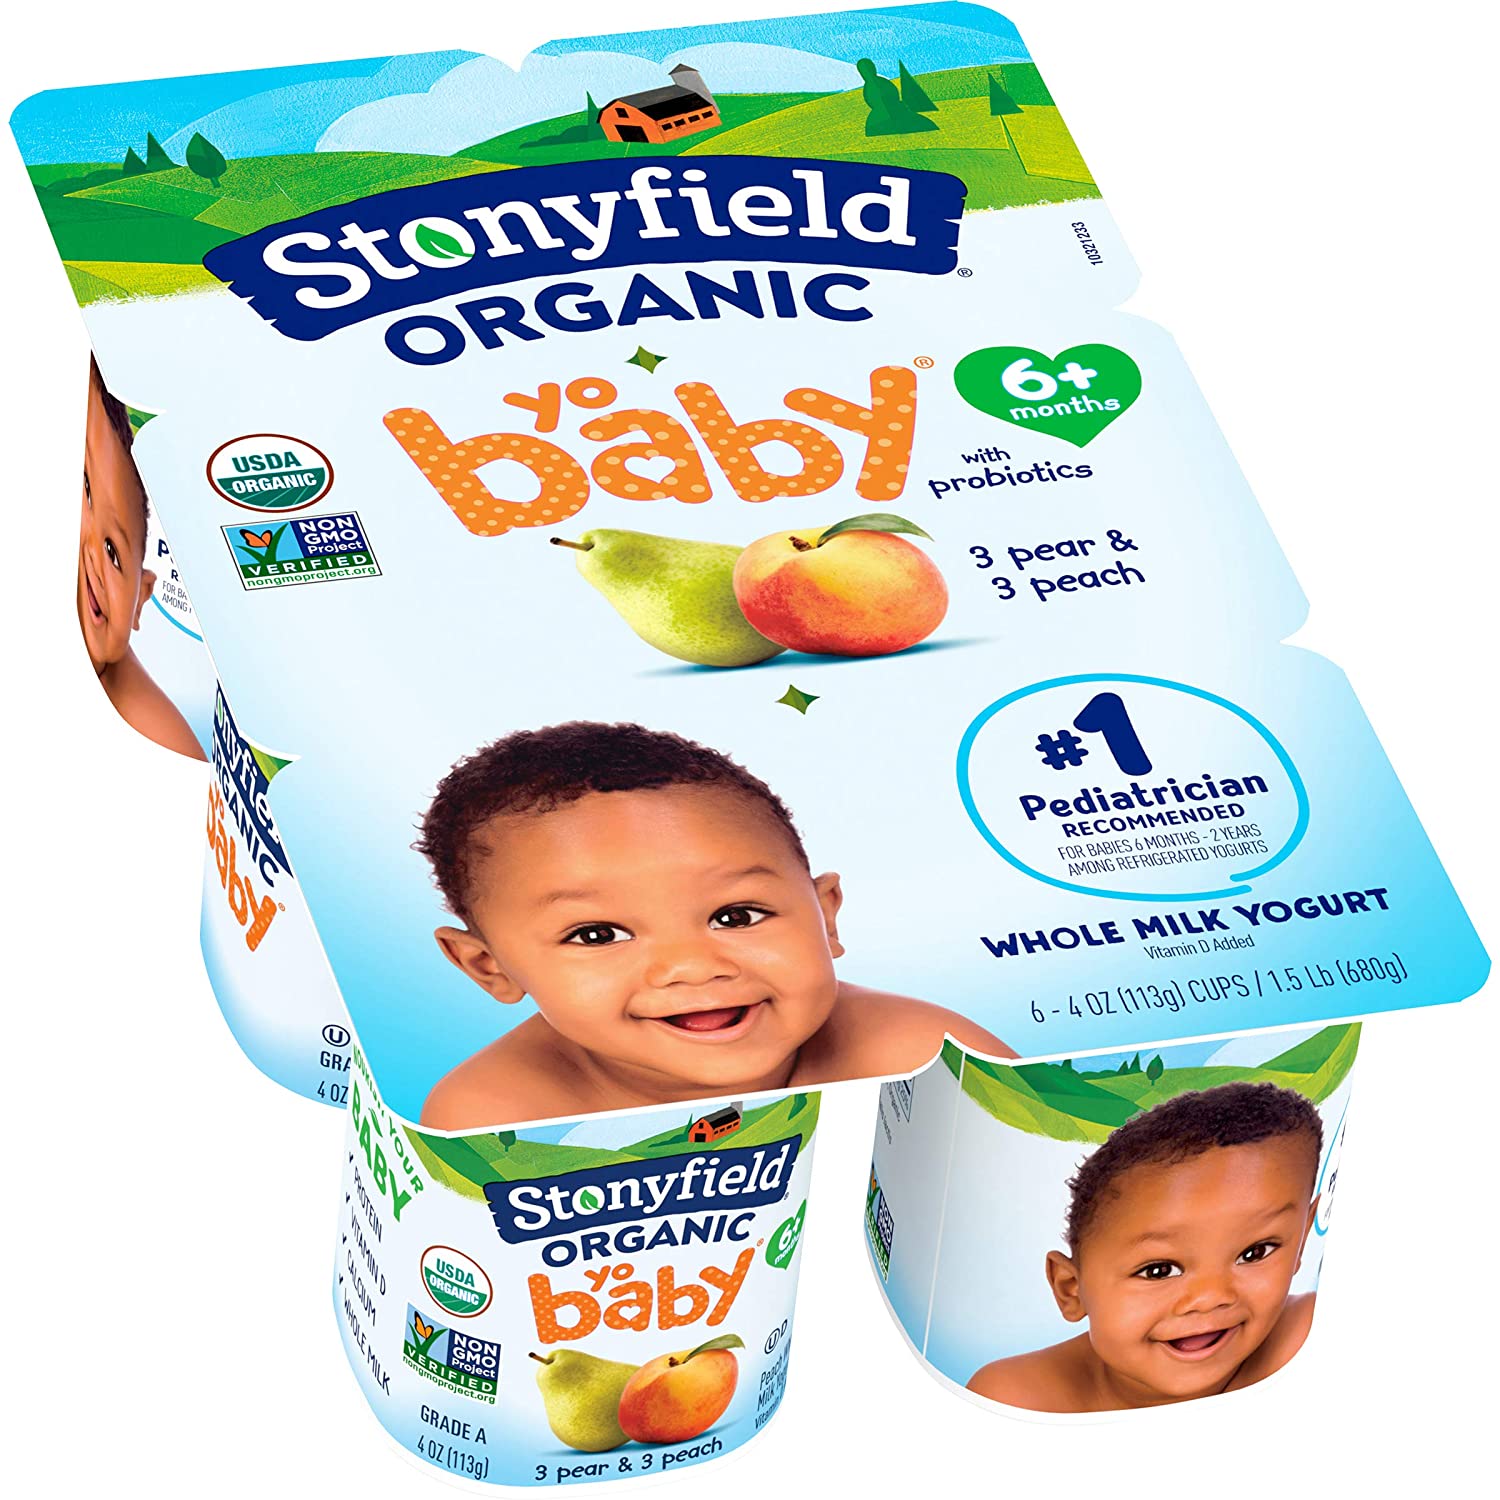 Stonyfield Organic YoBaby Stage 1 Baby Yogurt Cups, Pear & Peach, 6 Ct - For Babies 6 Months & Older, Whole Milk Yogurt with Probiotics, 4 oz. Each